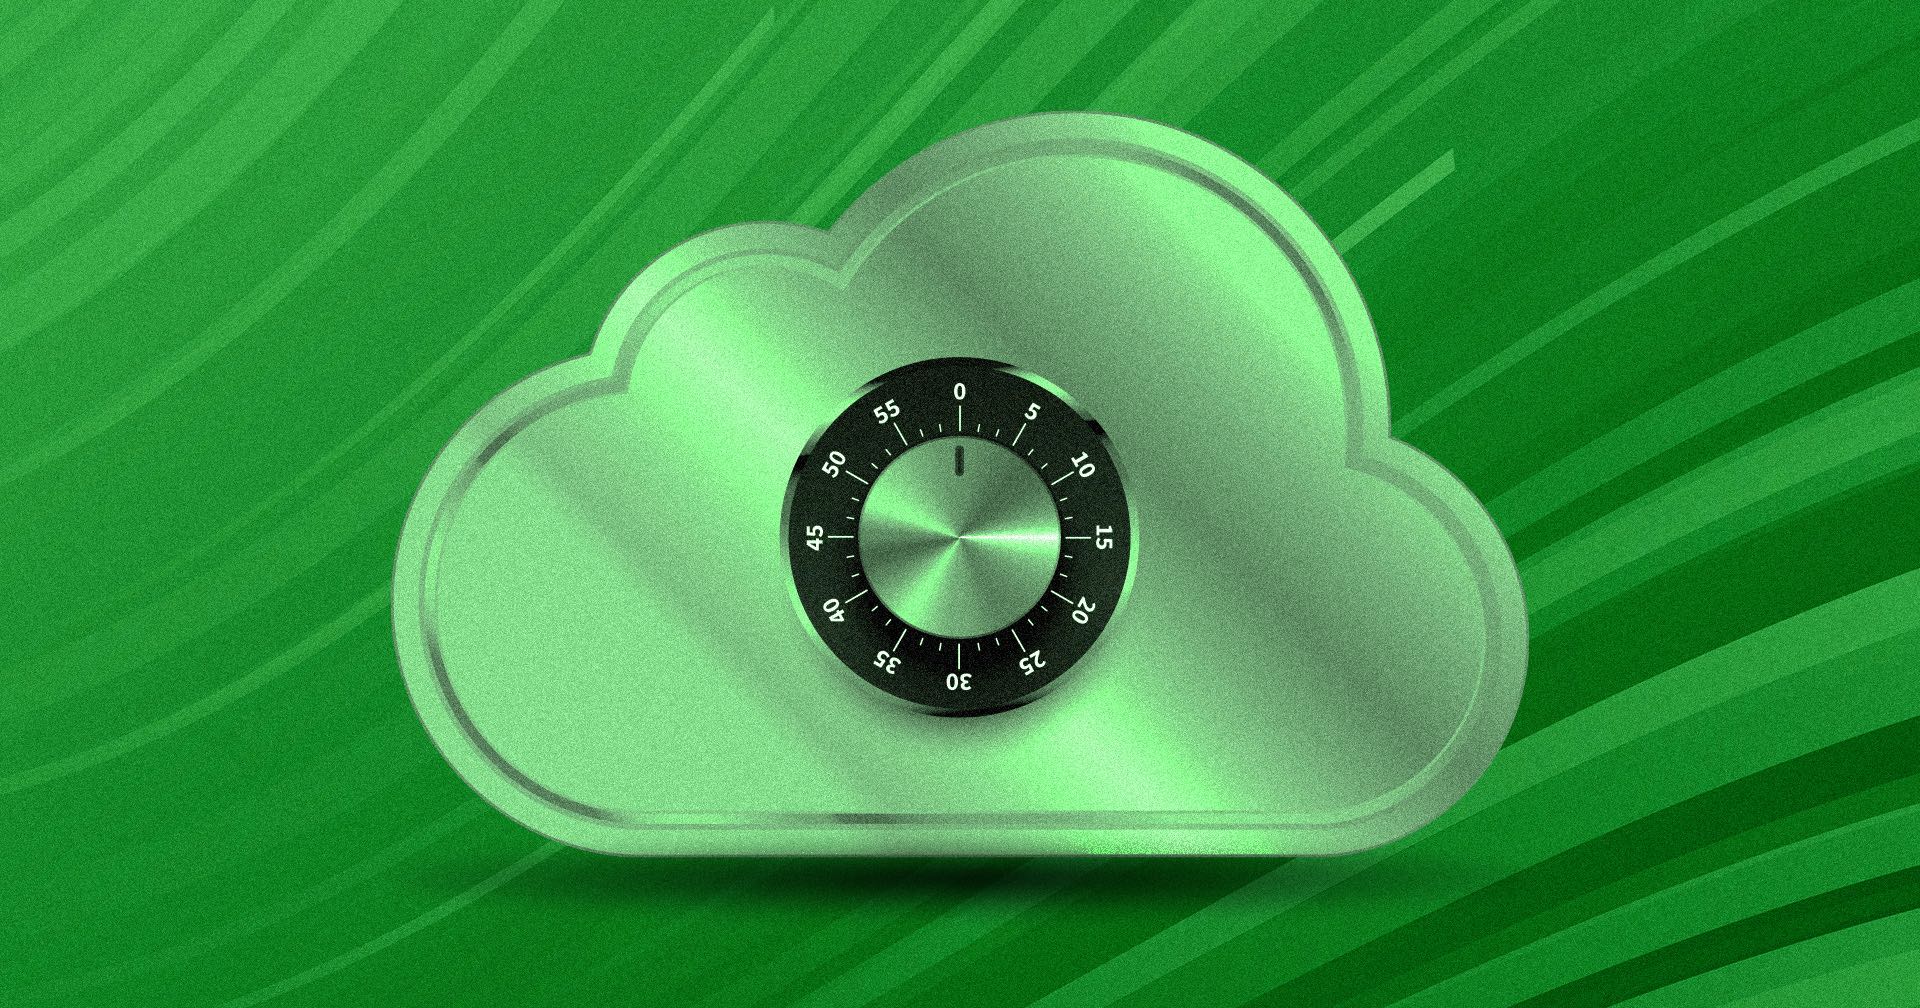 Mandatory Access Control In Cloud Computing